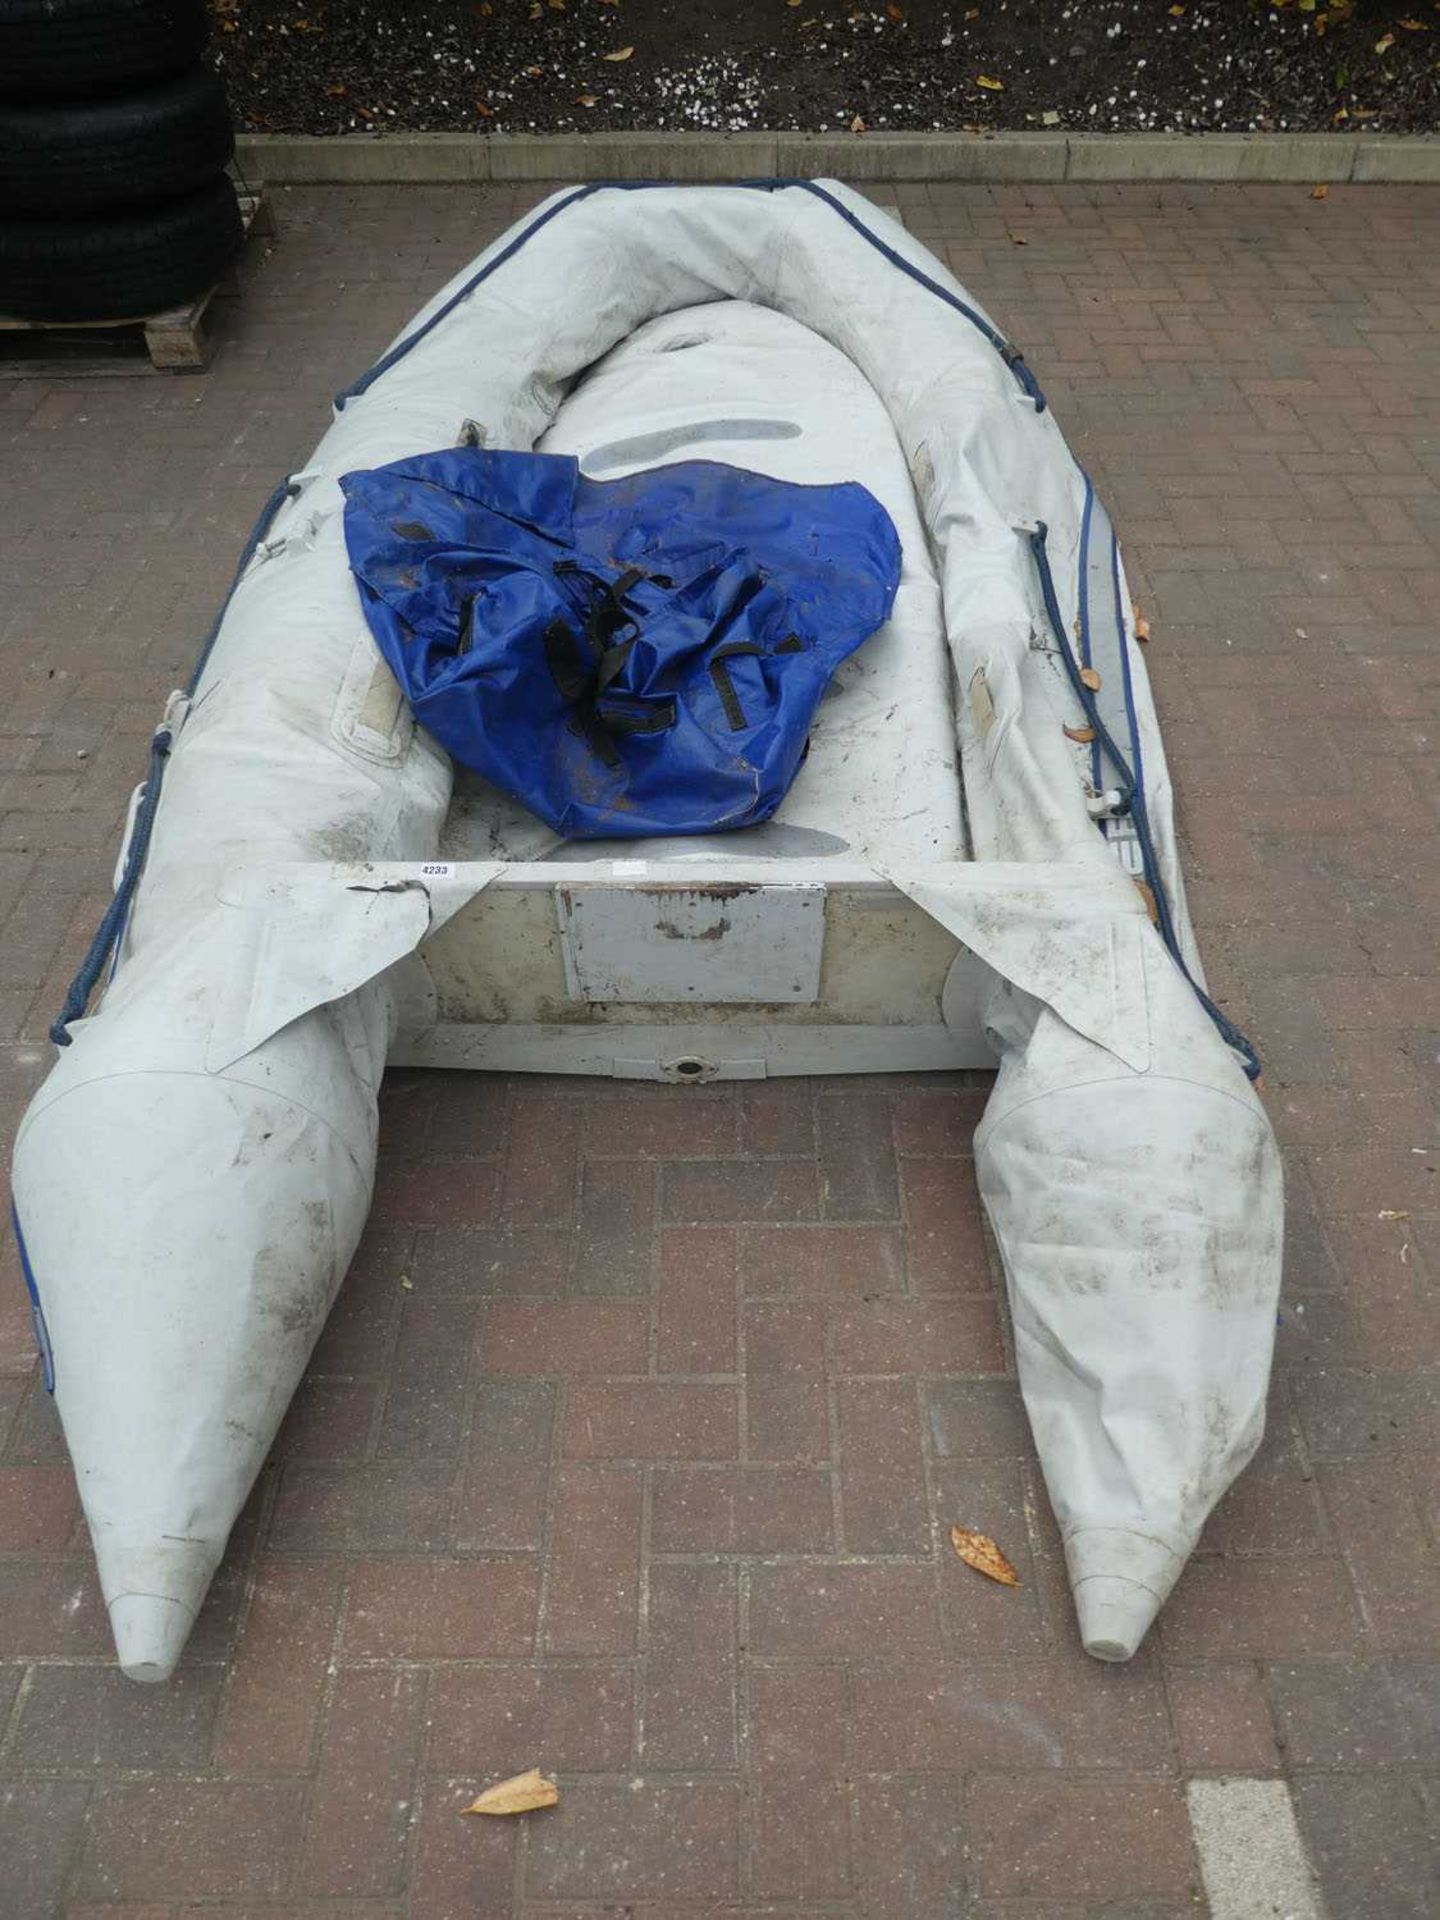 Quicksilver grey inflatable dinghy